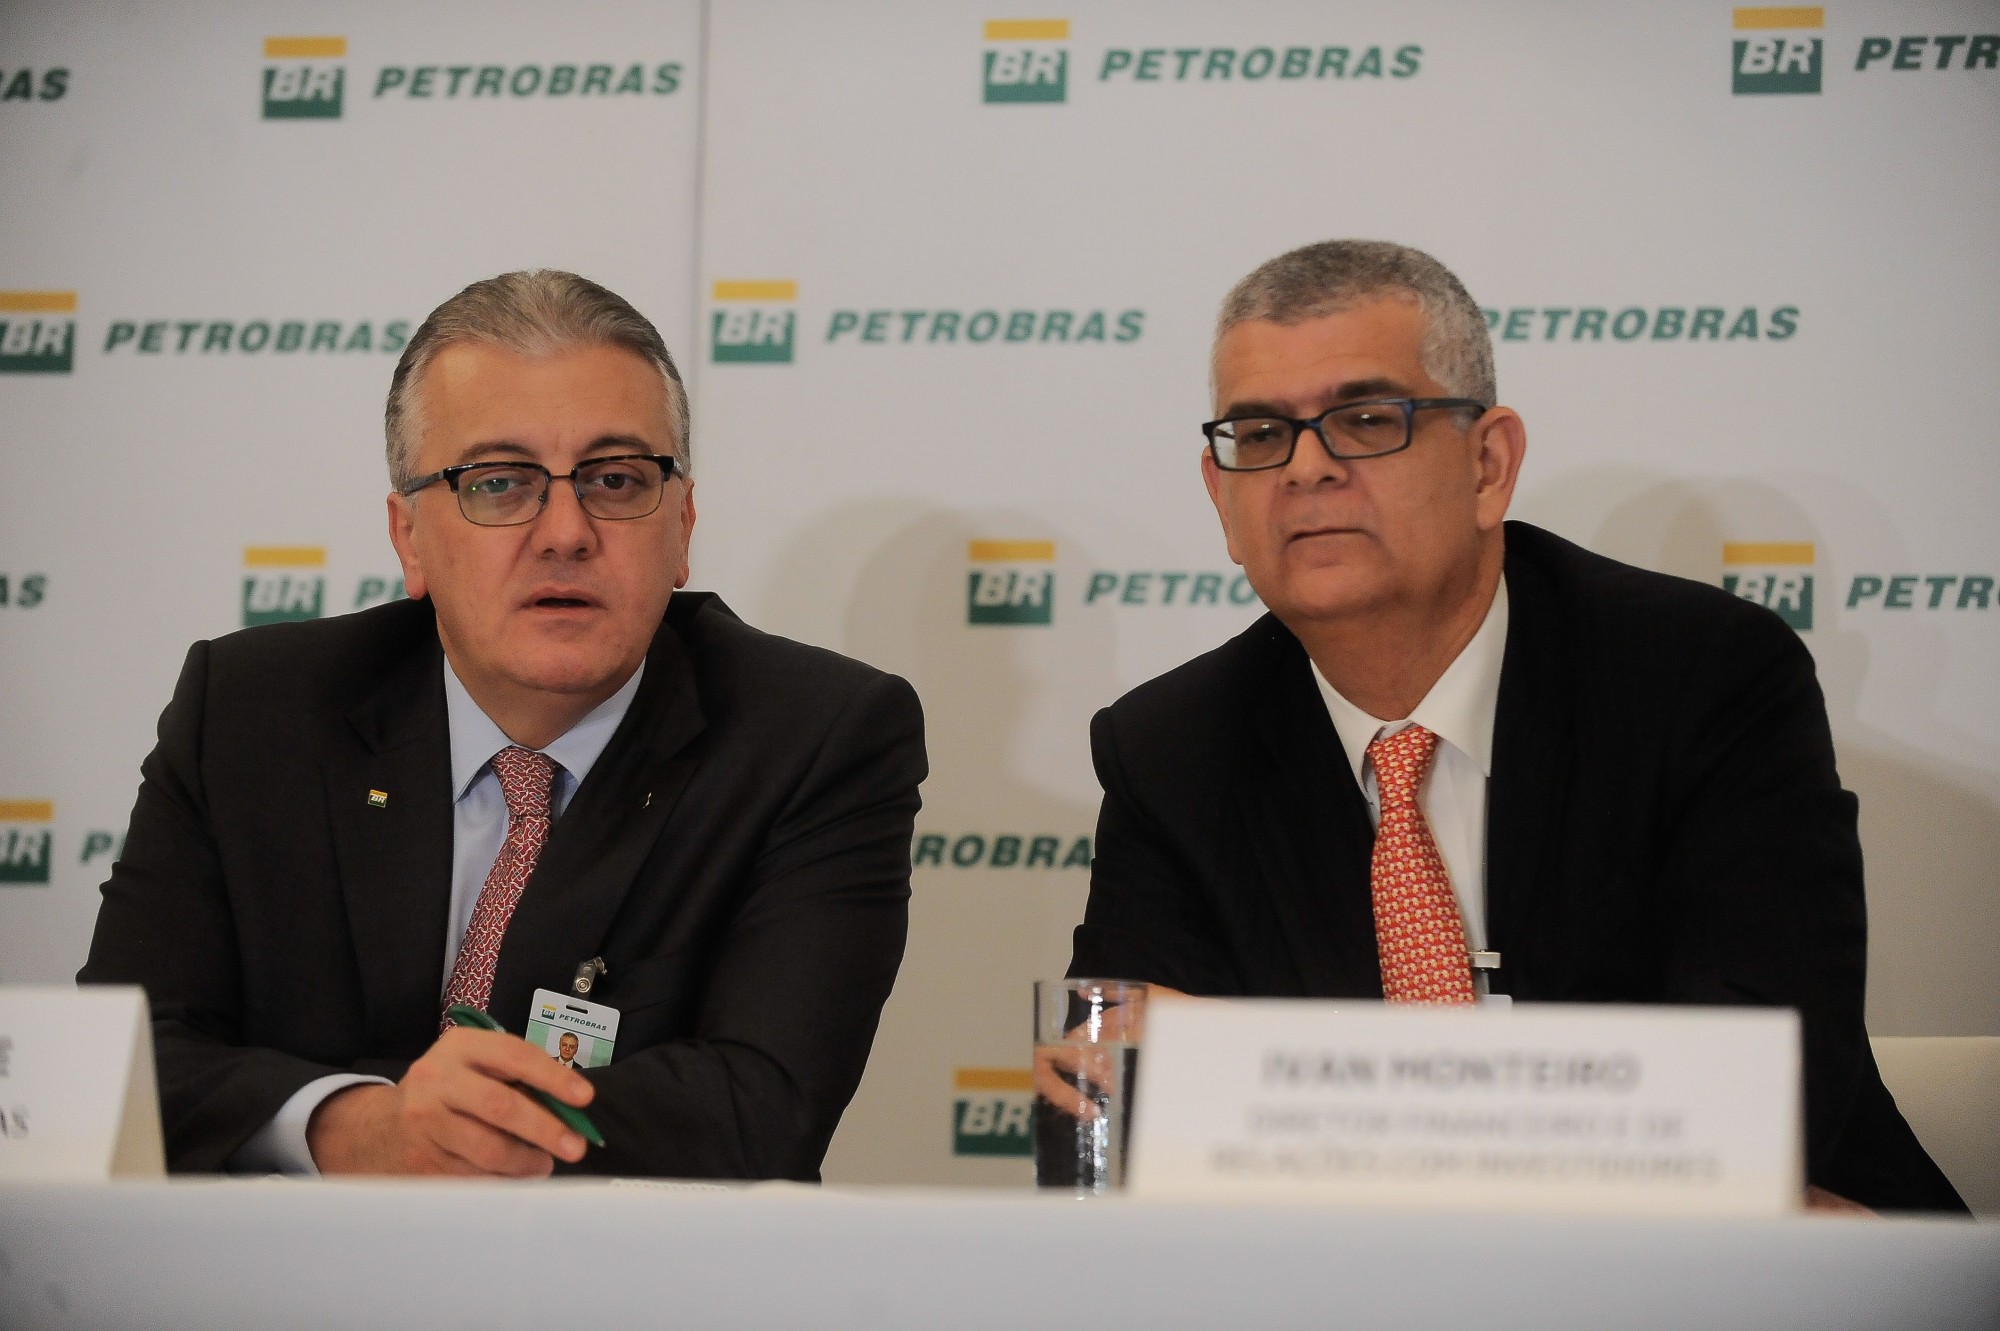 Brazil’s Petrobras Approves IPO of BR Distribuidora